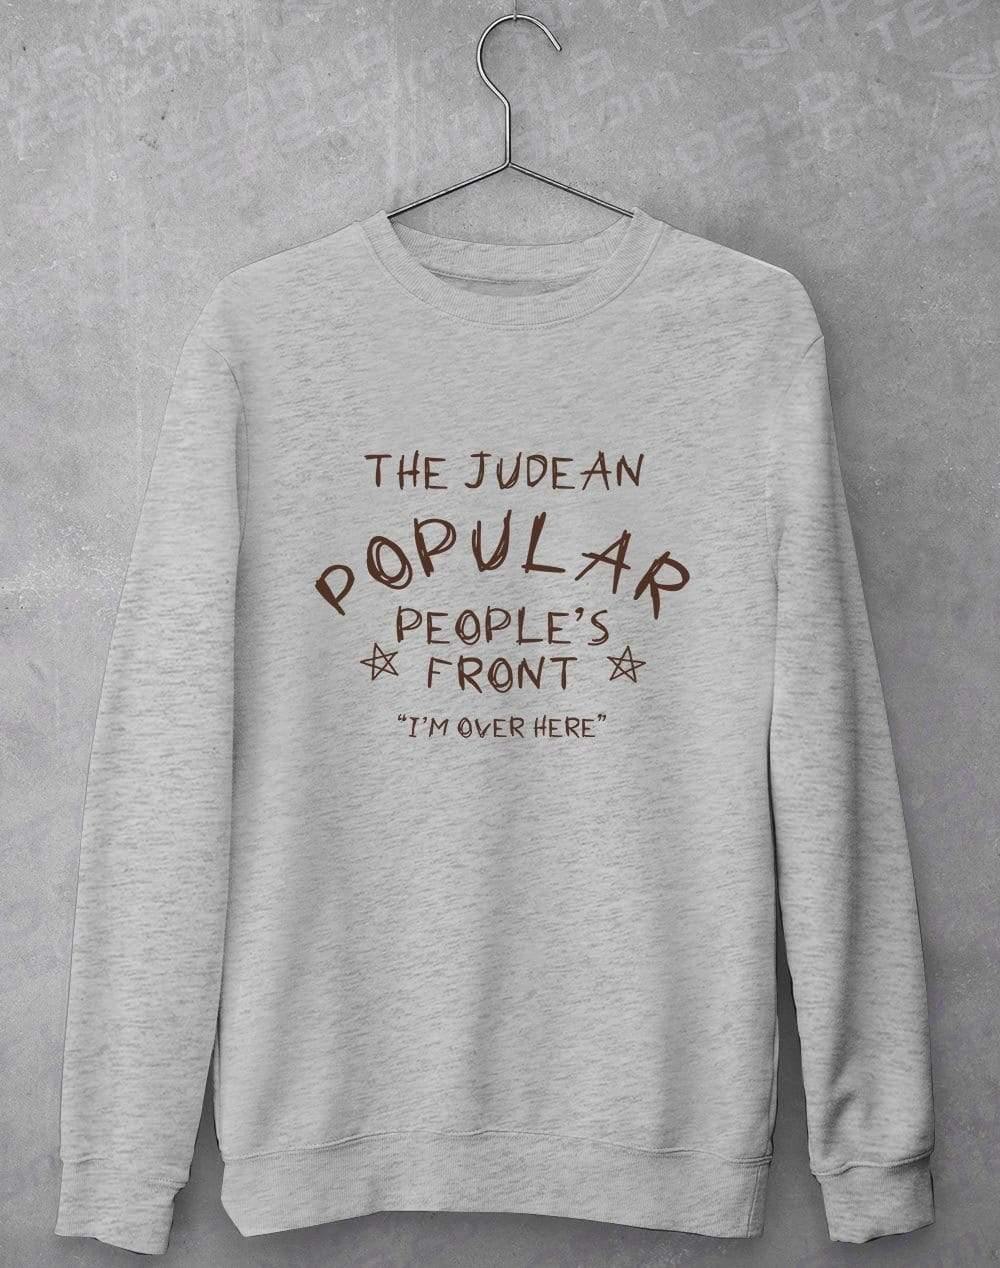 Judean Pupular Peoples Front Sweatshirt S / Heather  - Off World Tees